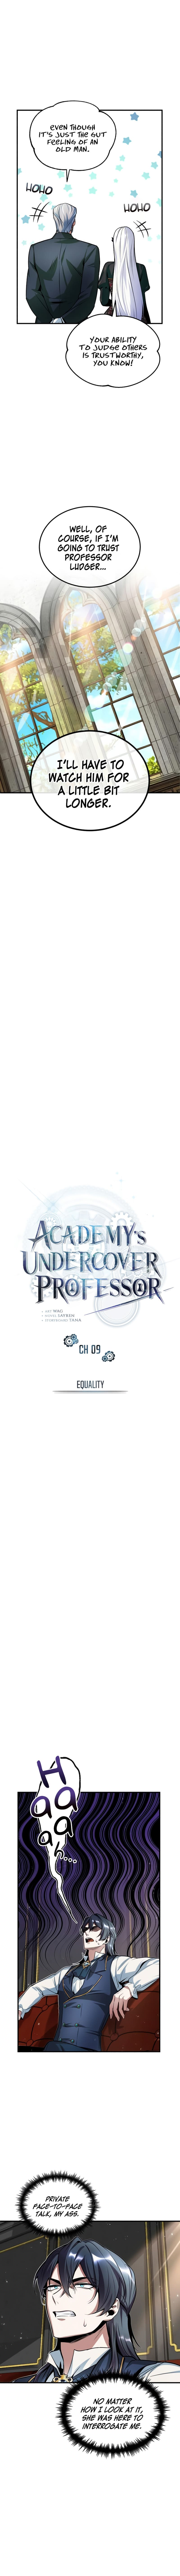 Academy’s Undercover Professor chapter 9